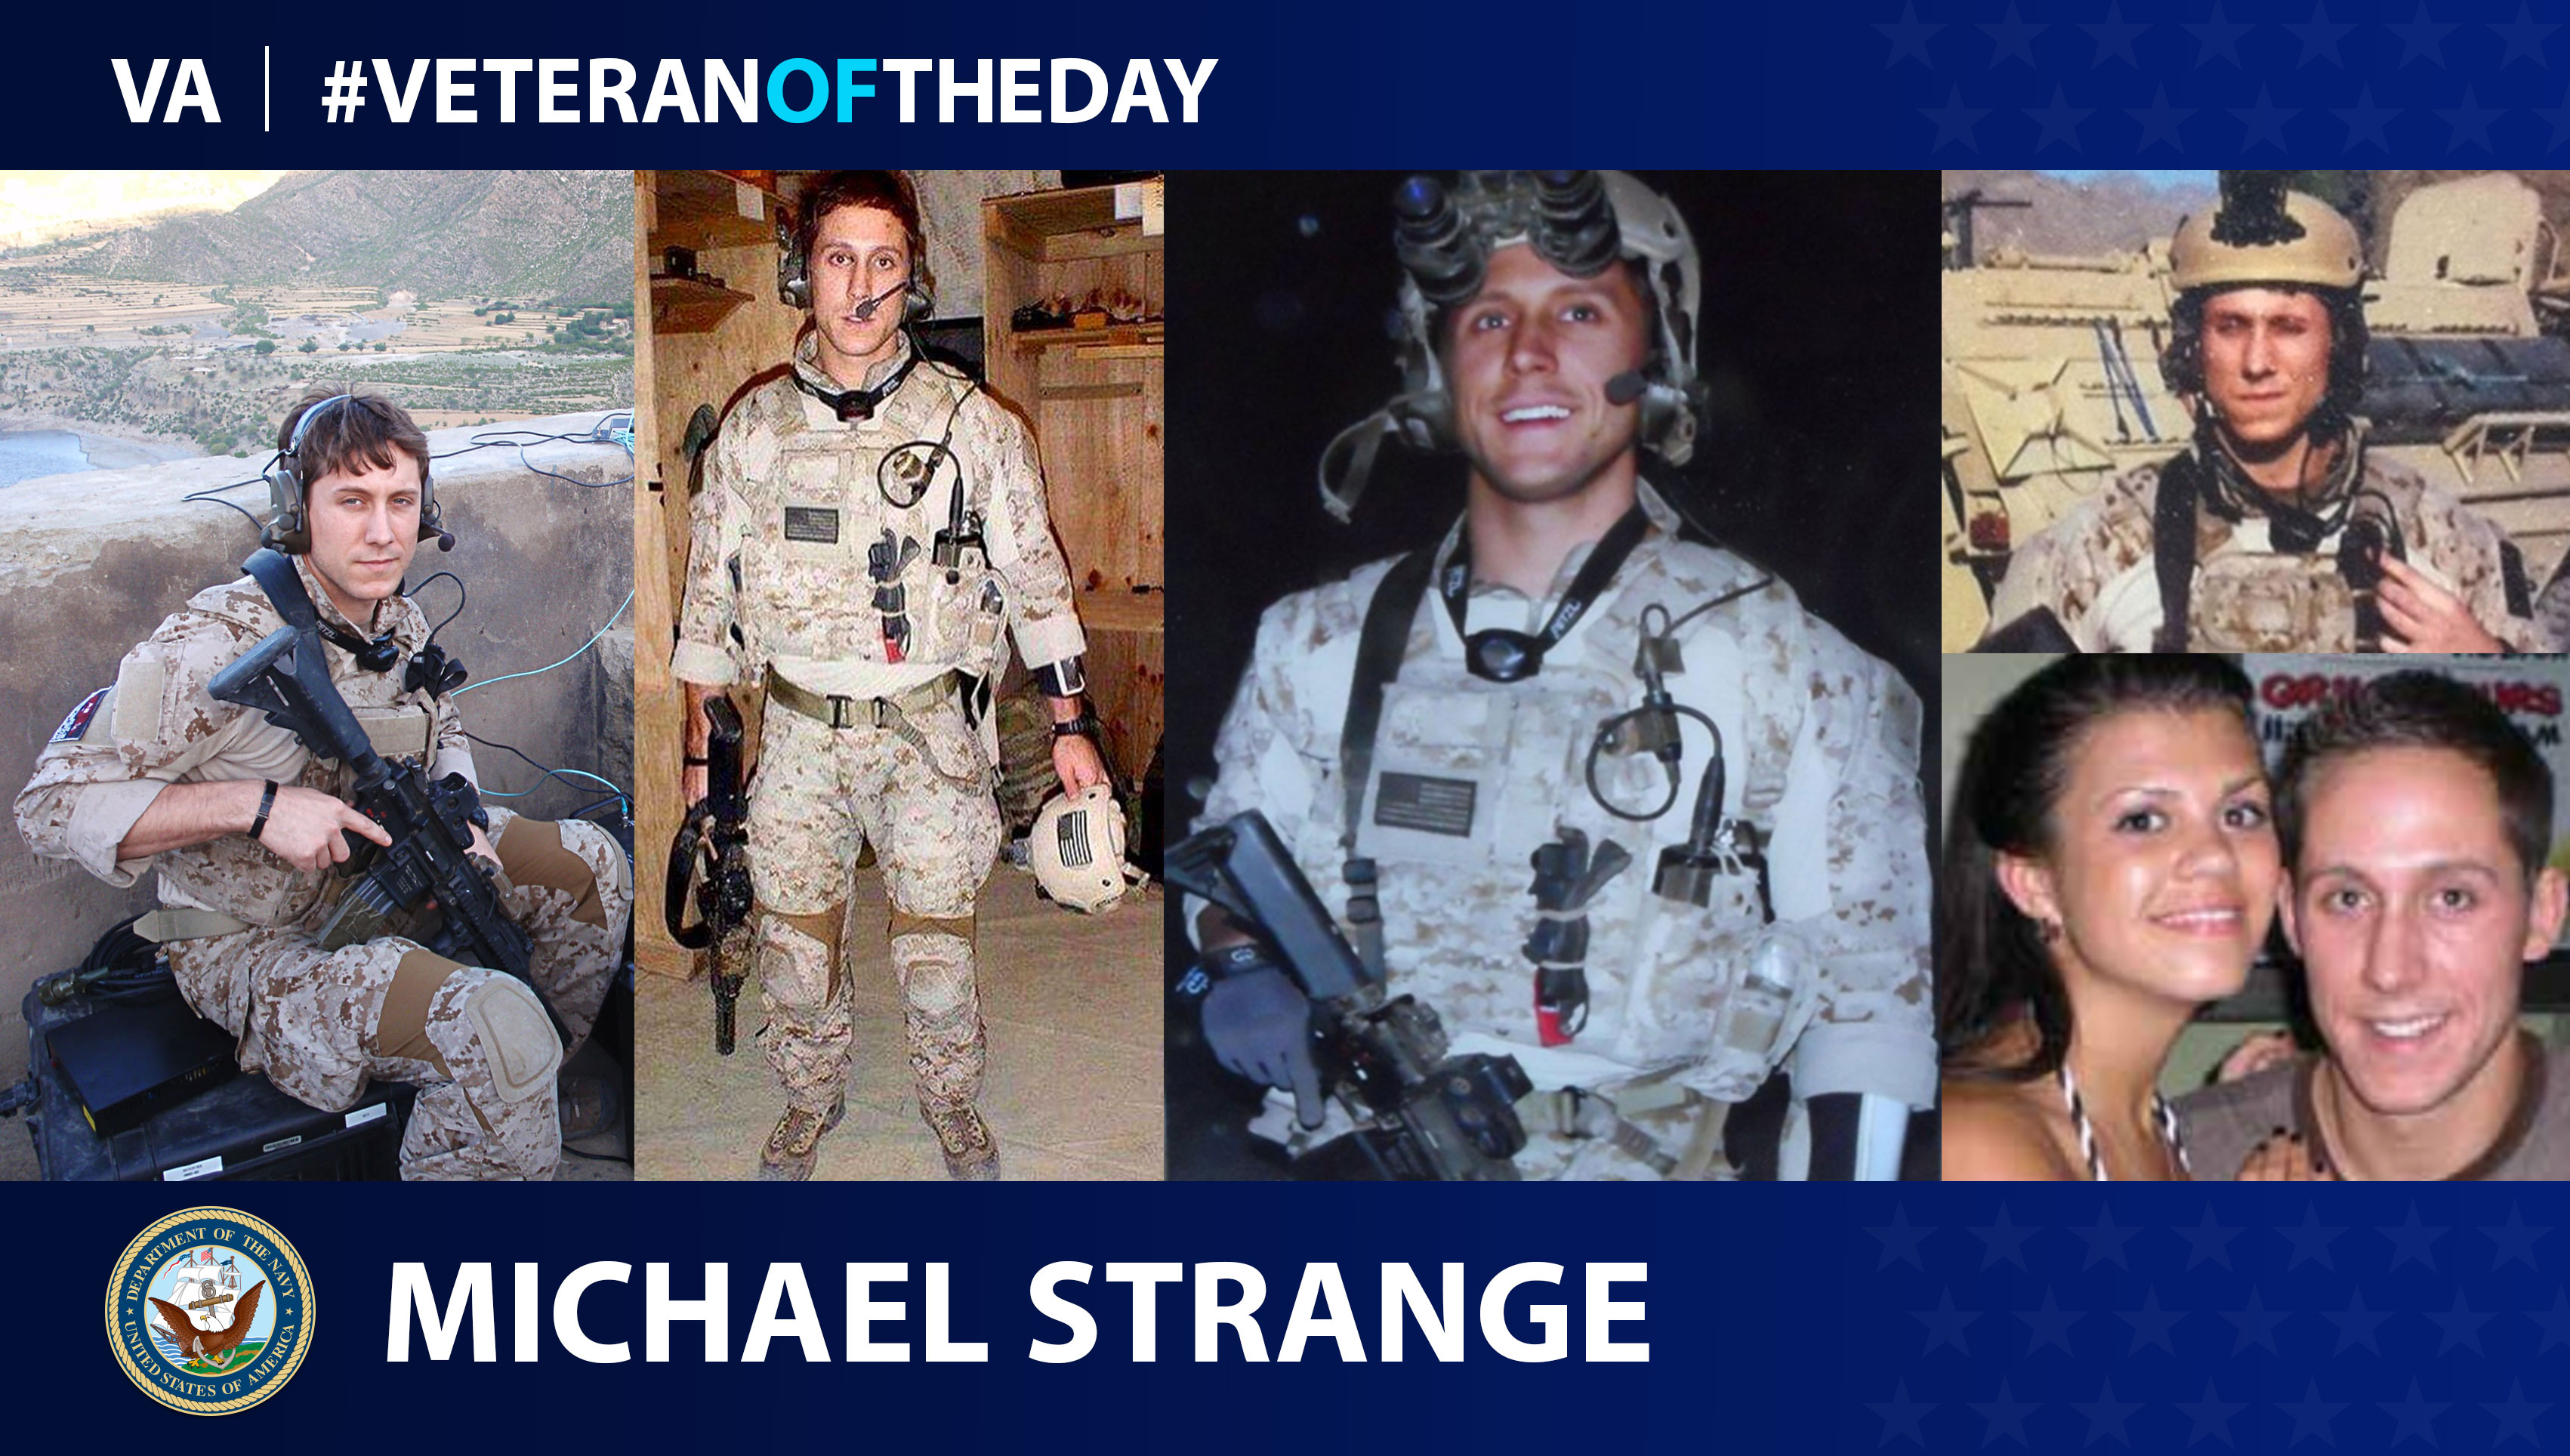 Navy Veteran Michael Strange is today's Veteran of the Day.